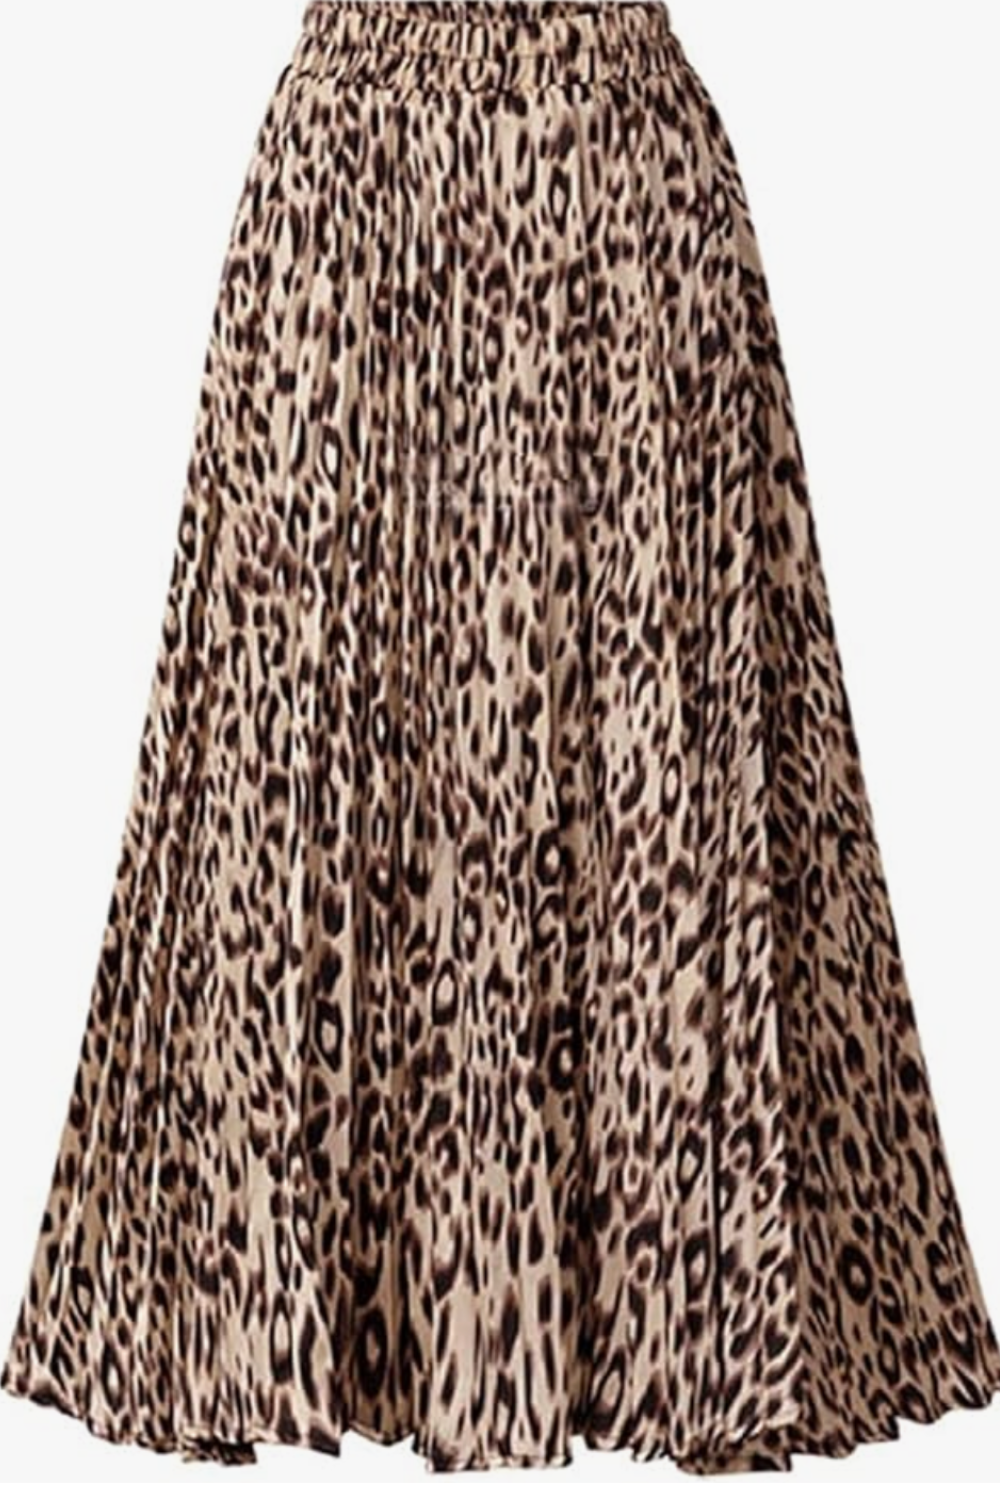 My Moment Leopard Pleated Midi Skirt